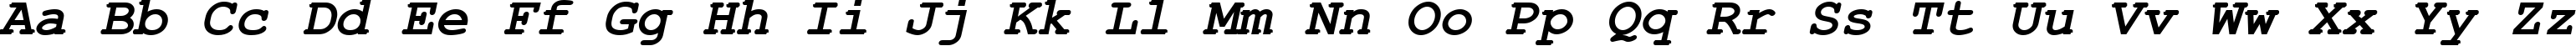 Пример написания английского алфавита шрифтом Courier New Cyr Bold Italic